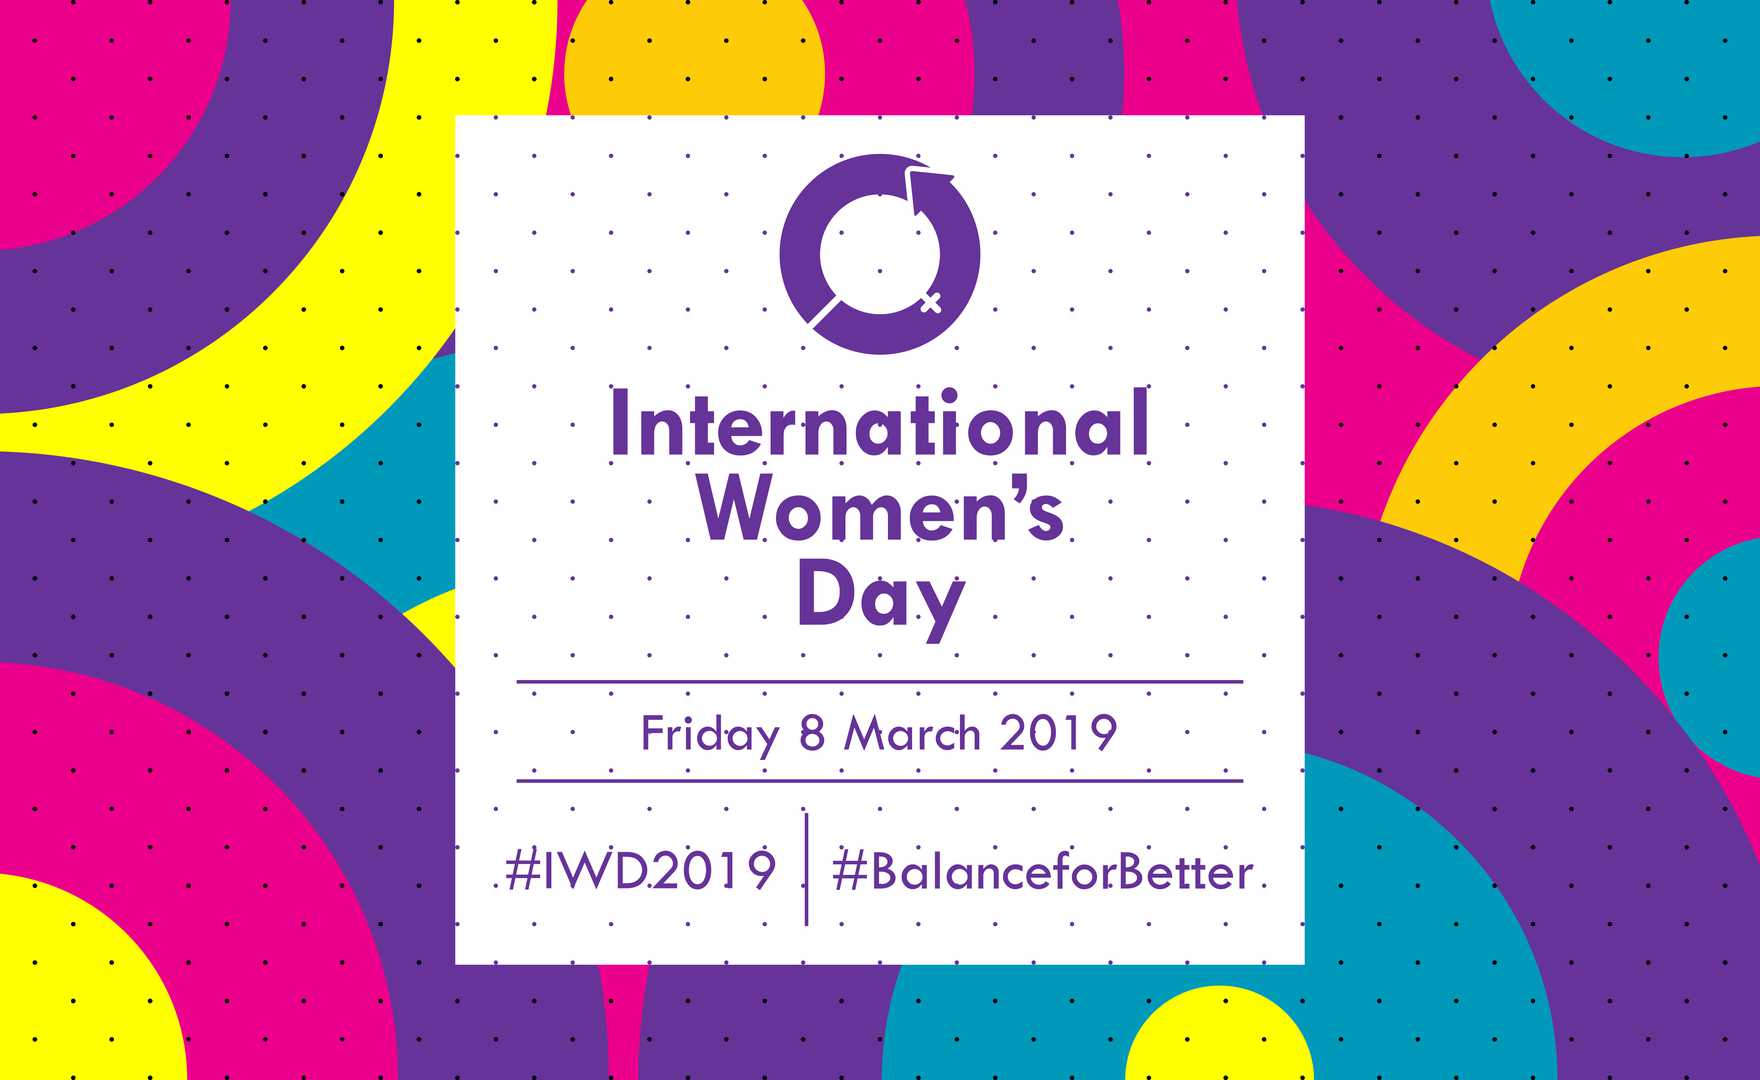 Celebrating International Women's Day 2019